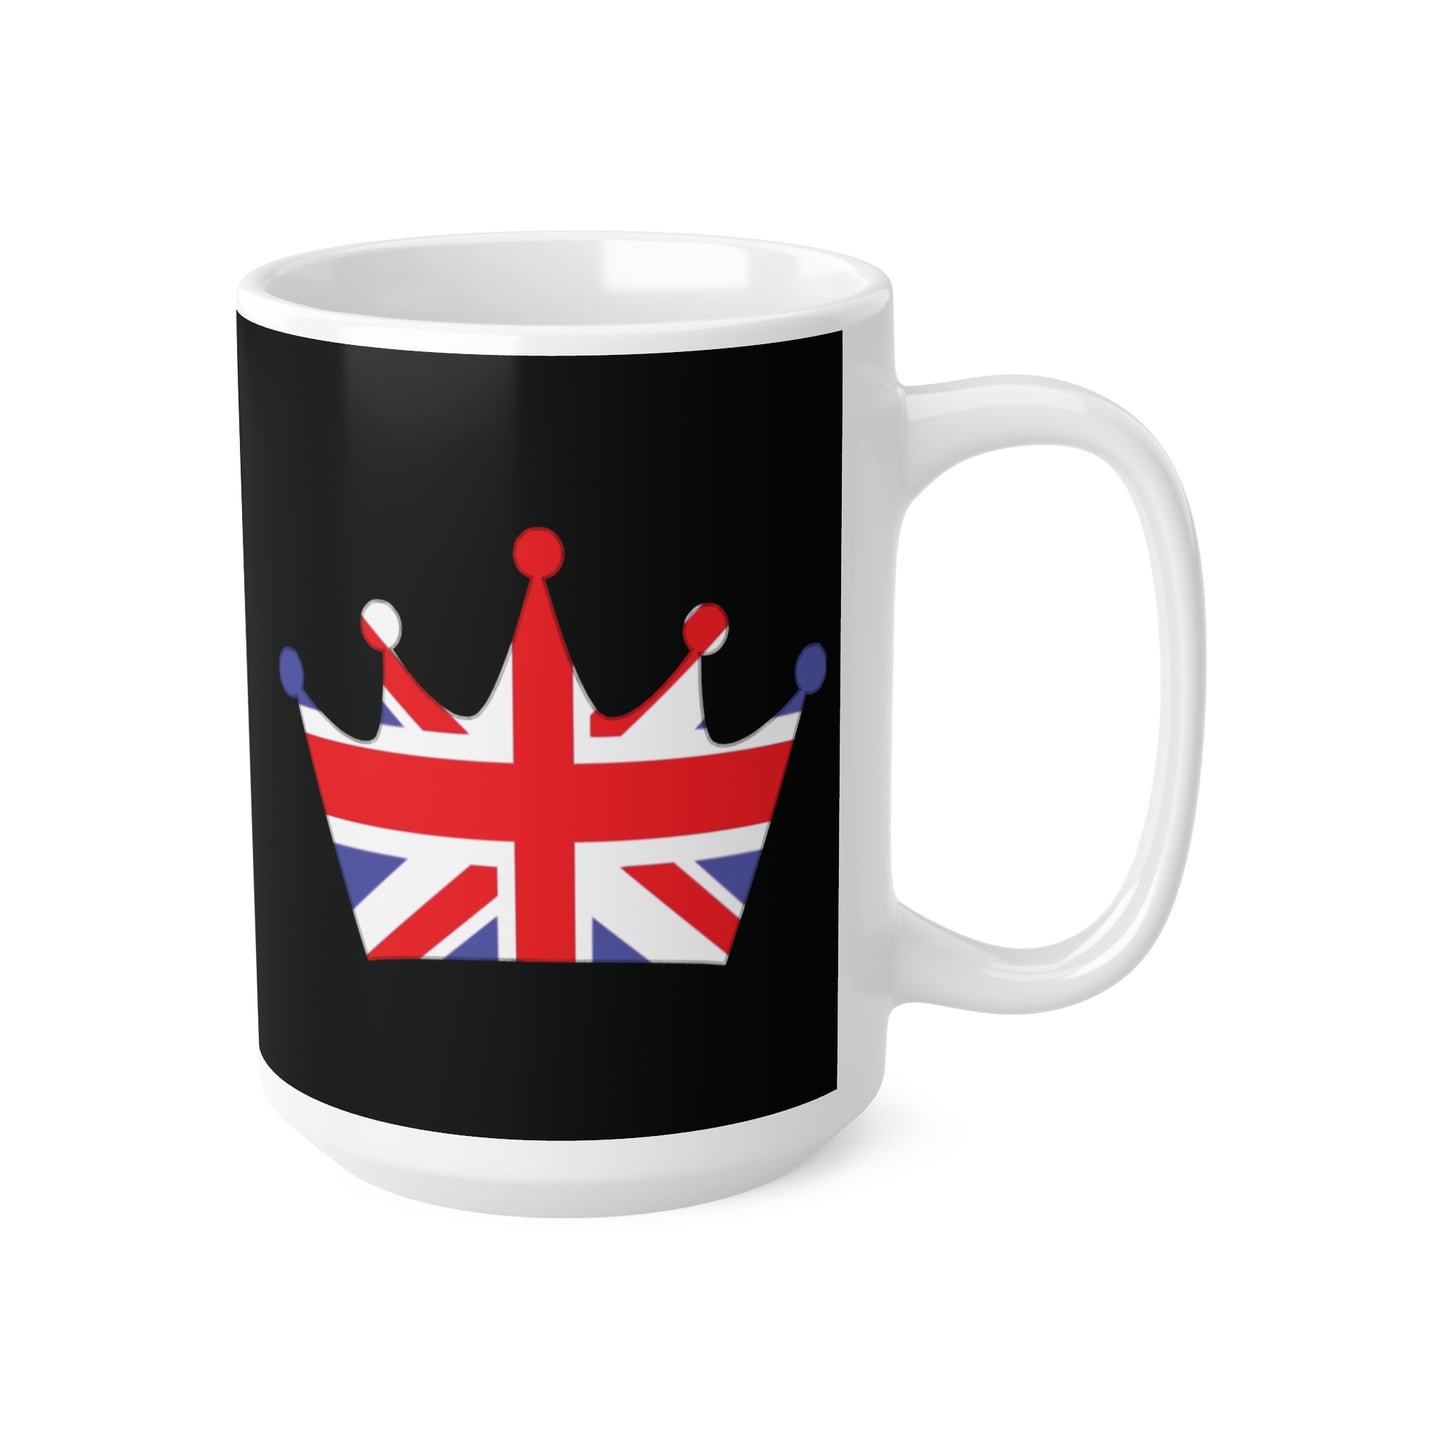 Union Jack Flag Royal Crown Coffee Mug